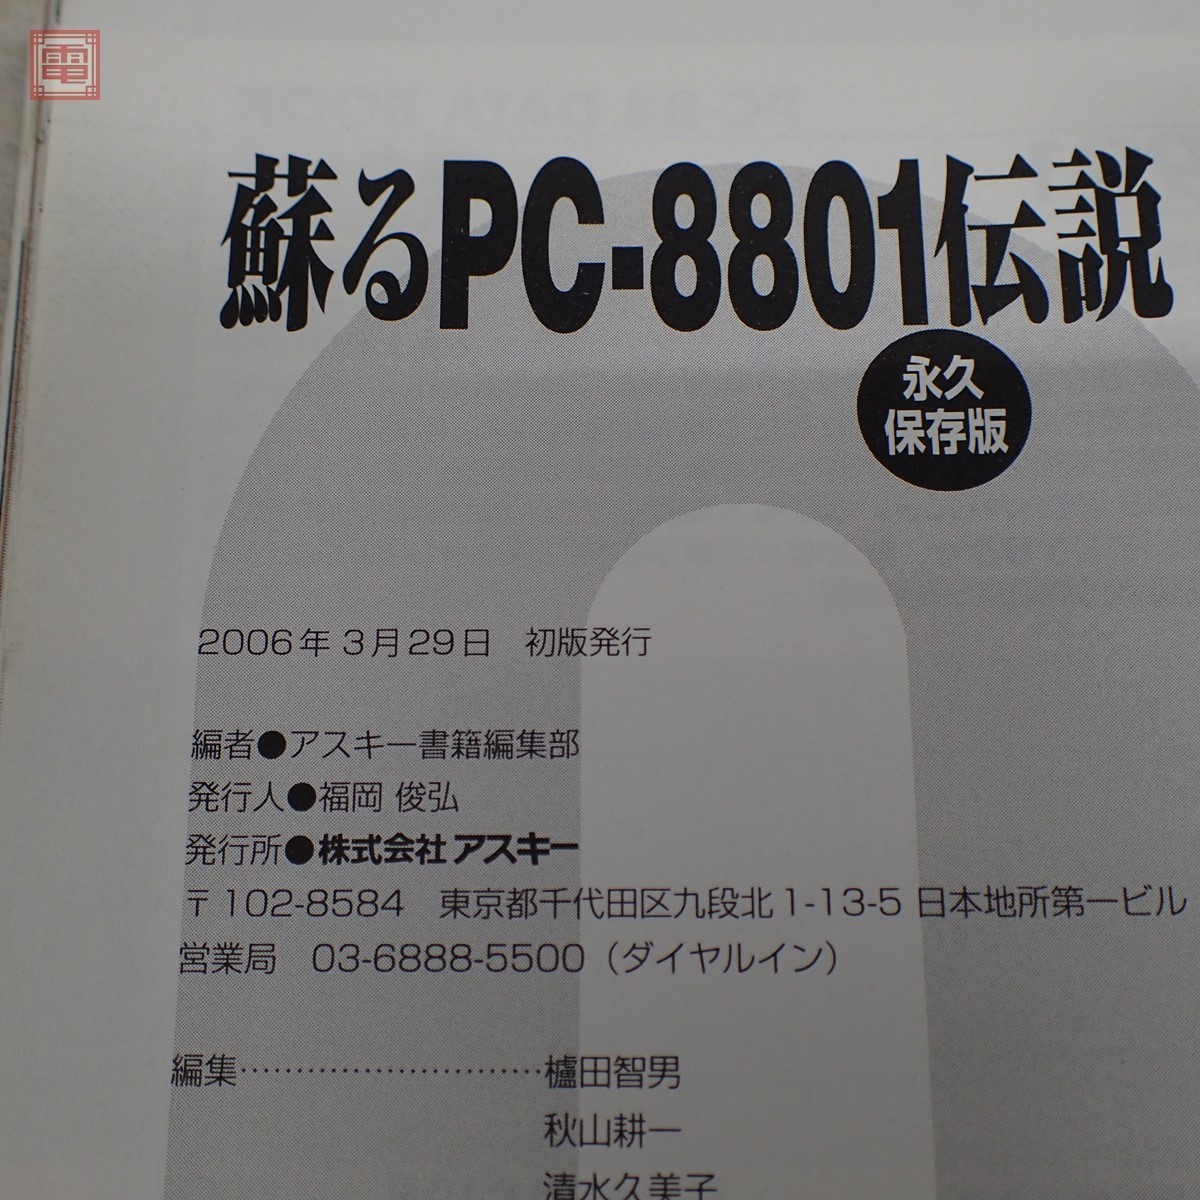 特別送料無料！】 蘇るPC-8801伝説 : 永久保存版 asakusa.sub.jp